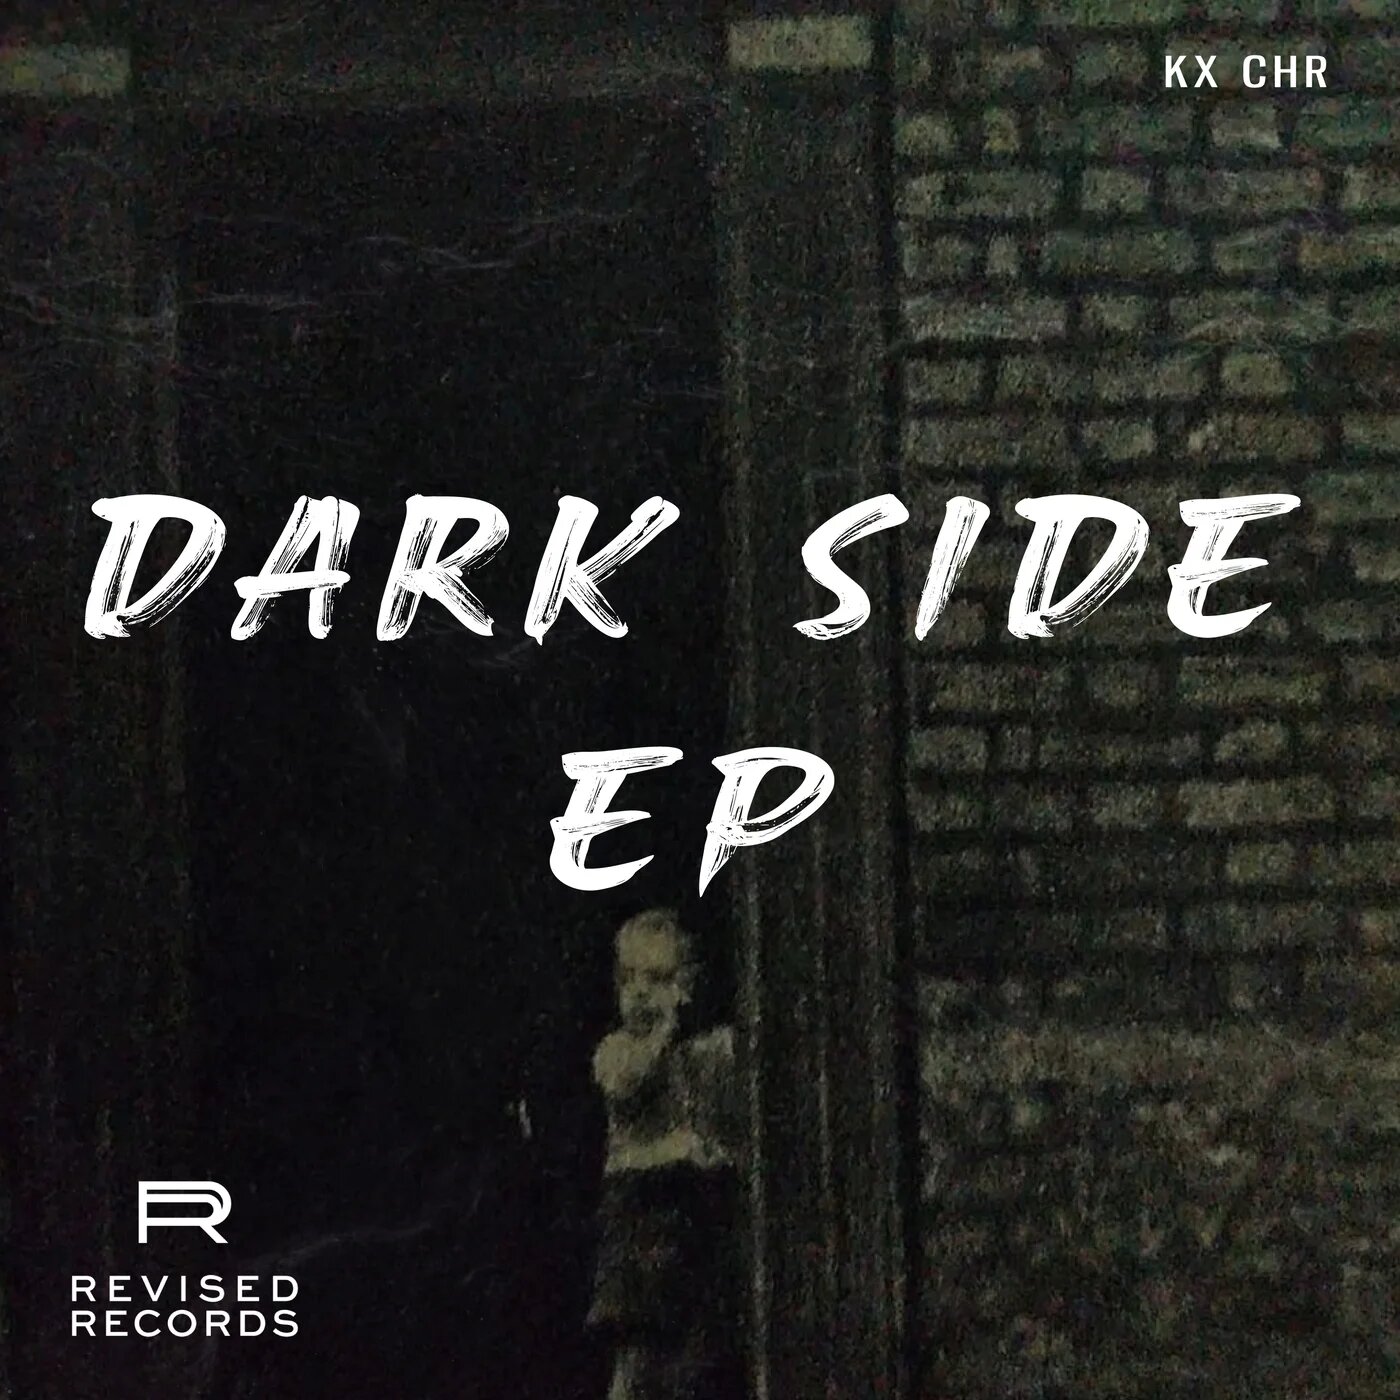 KX CHR - SNAKE BITE (Original Mix)